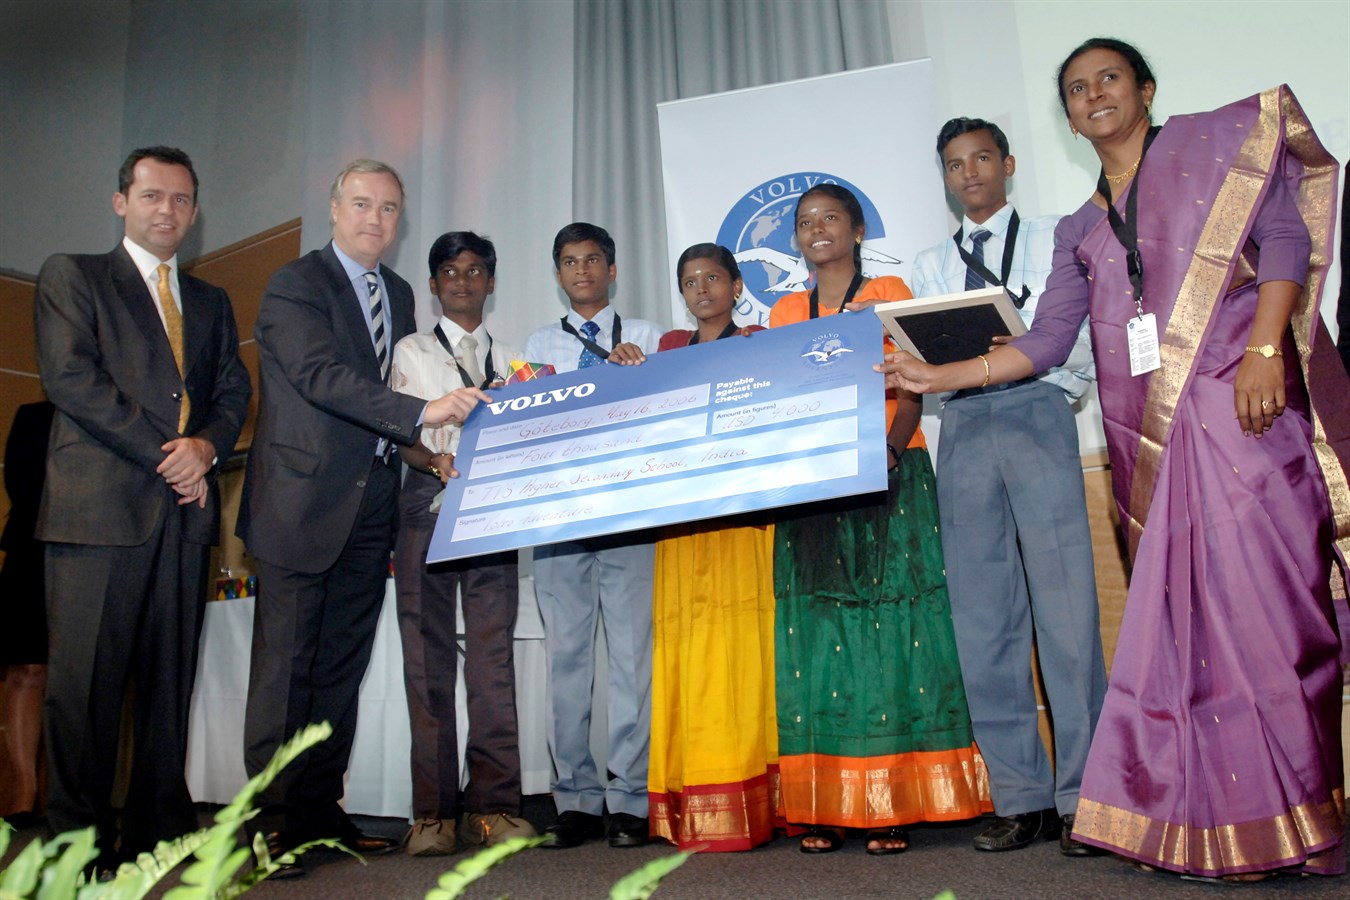 Third Prize Winners, India, Volvo Adventure 2006